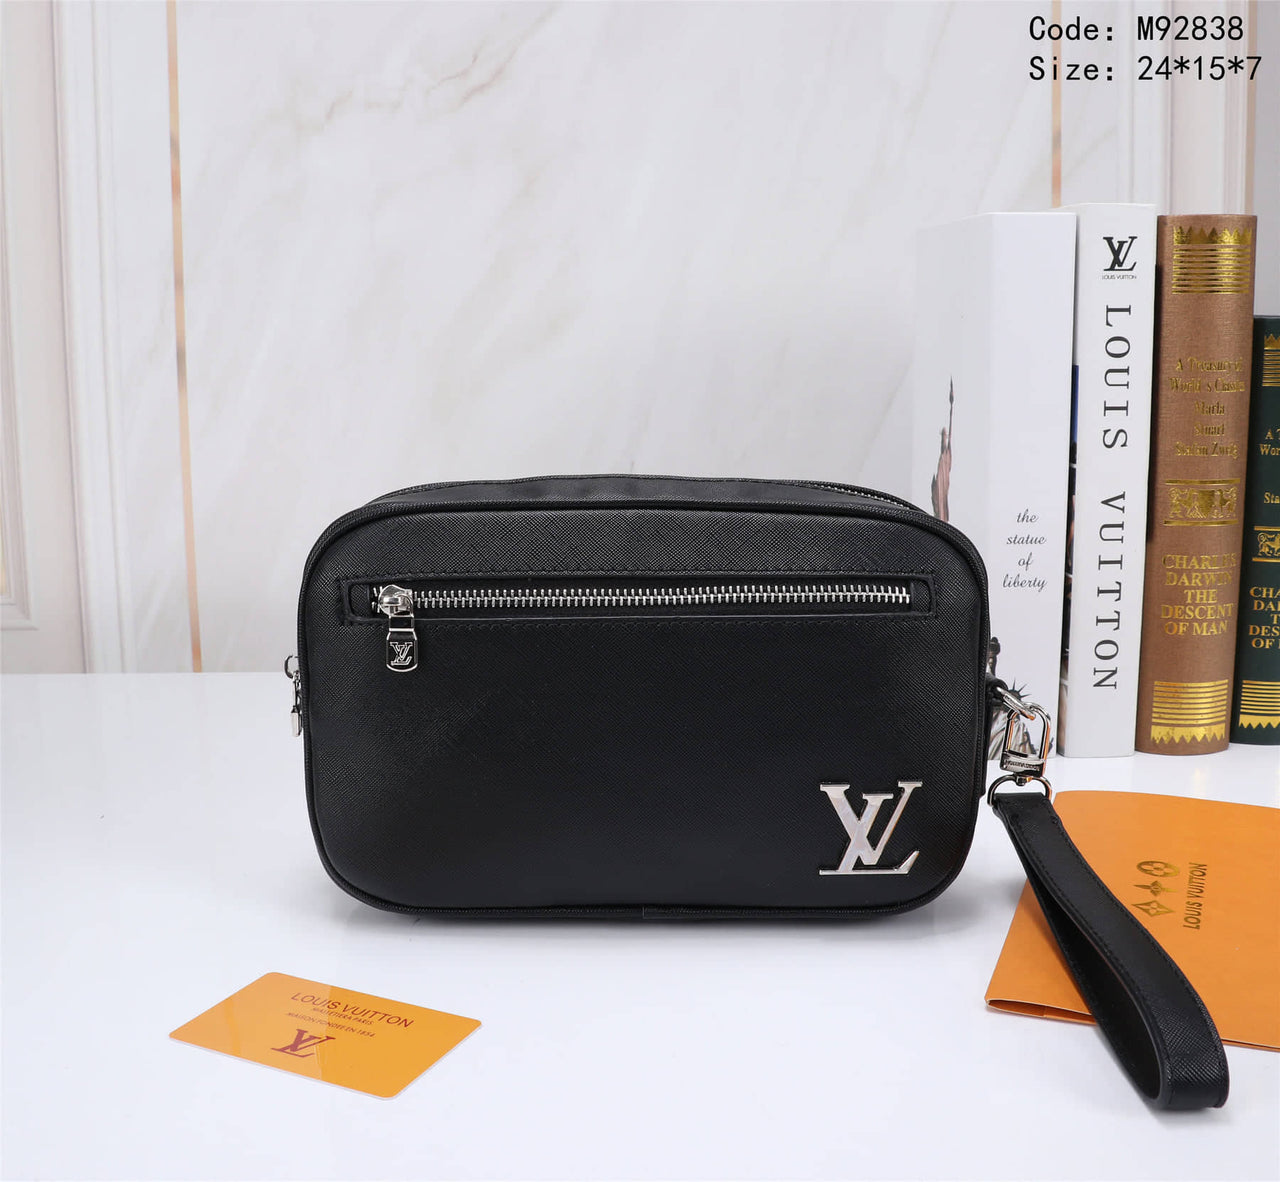 LV92838 Clutch Bag